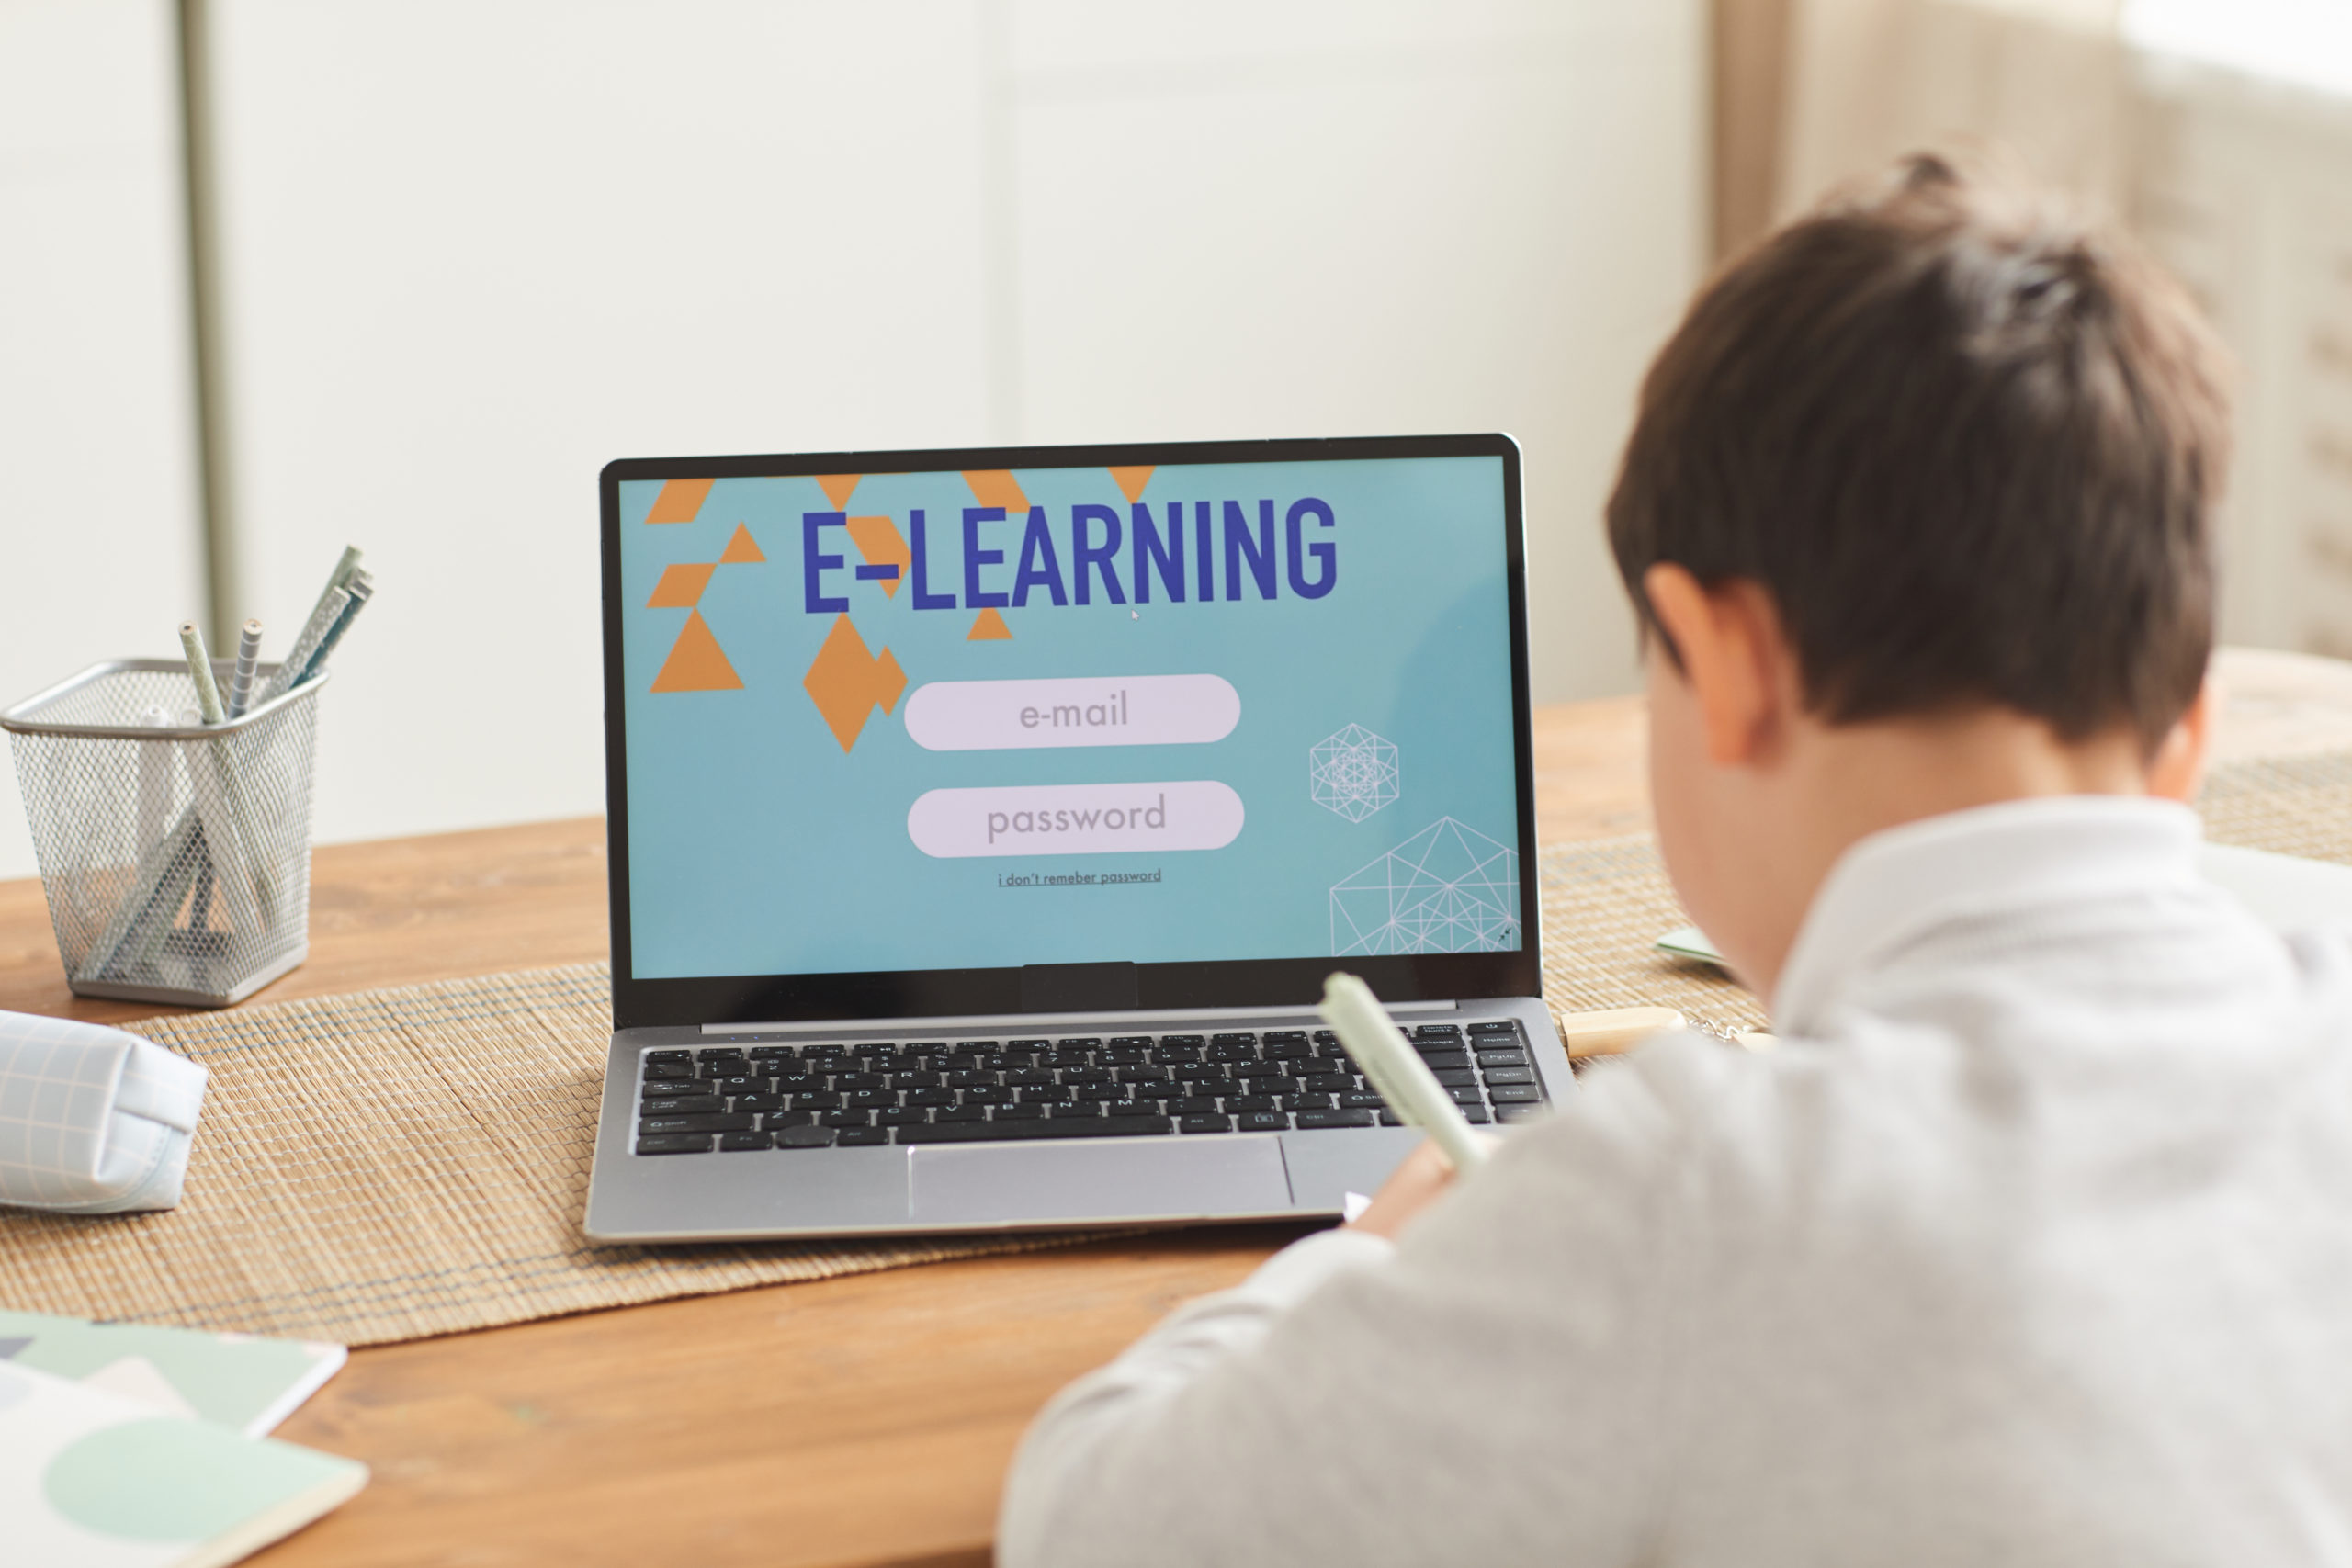 Learning website. E-Learning. Электронное обучение картинки. E-Learning site. Государственные сайты обучение